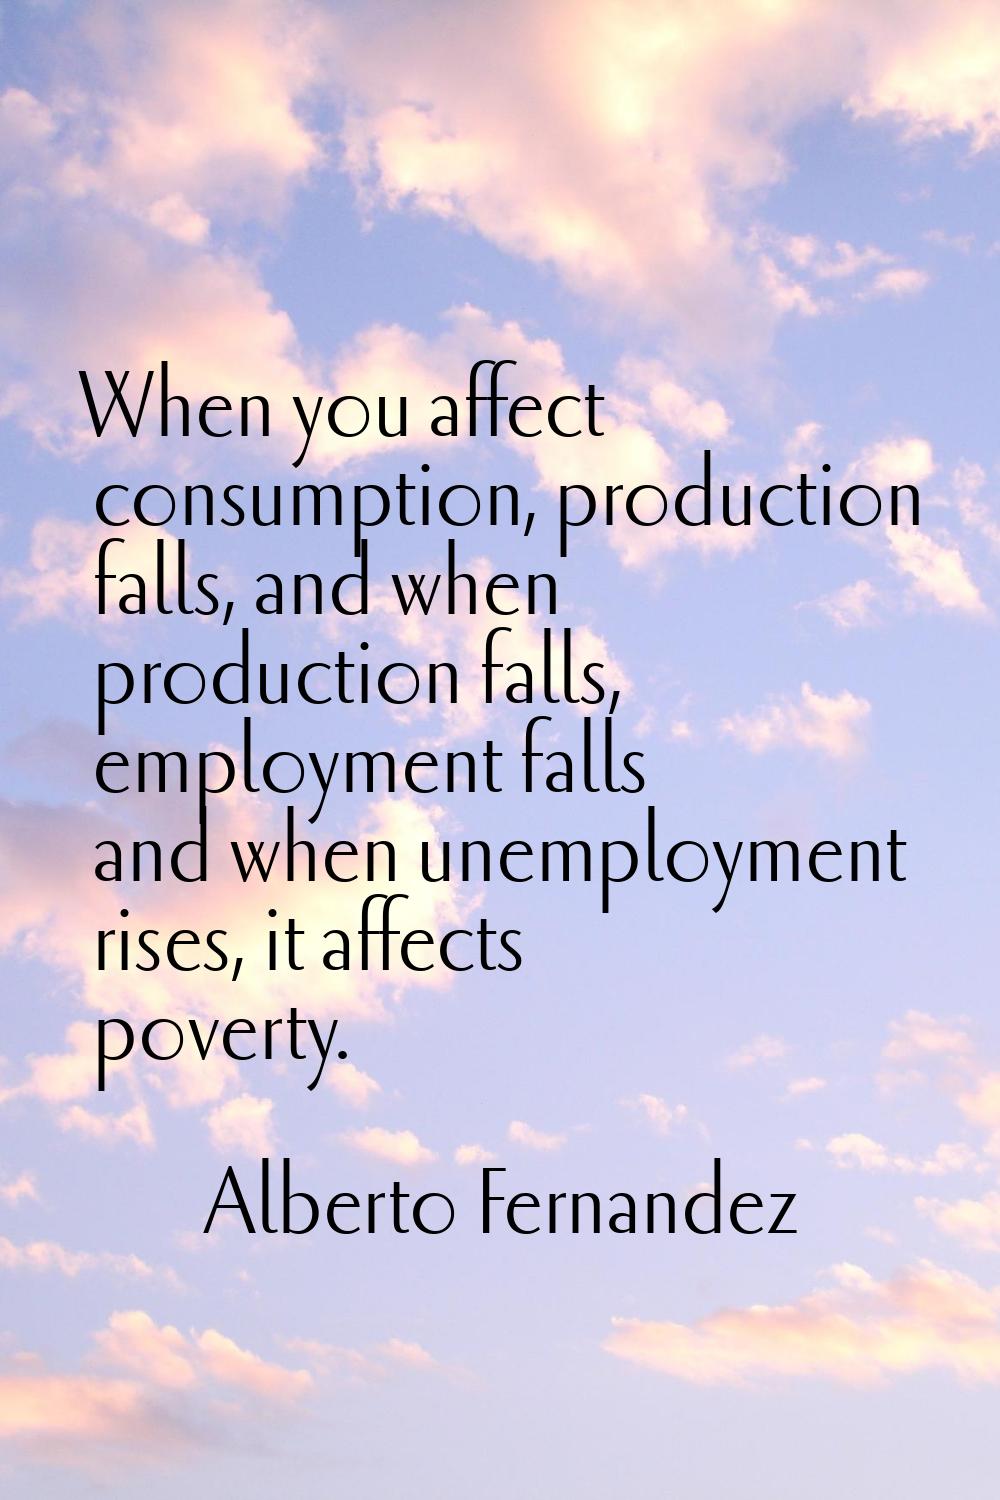 When you affect consumption, production falls, and when production falls, employment falls and when